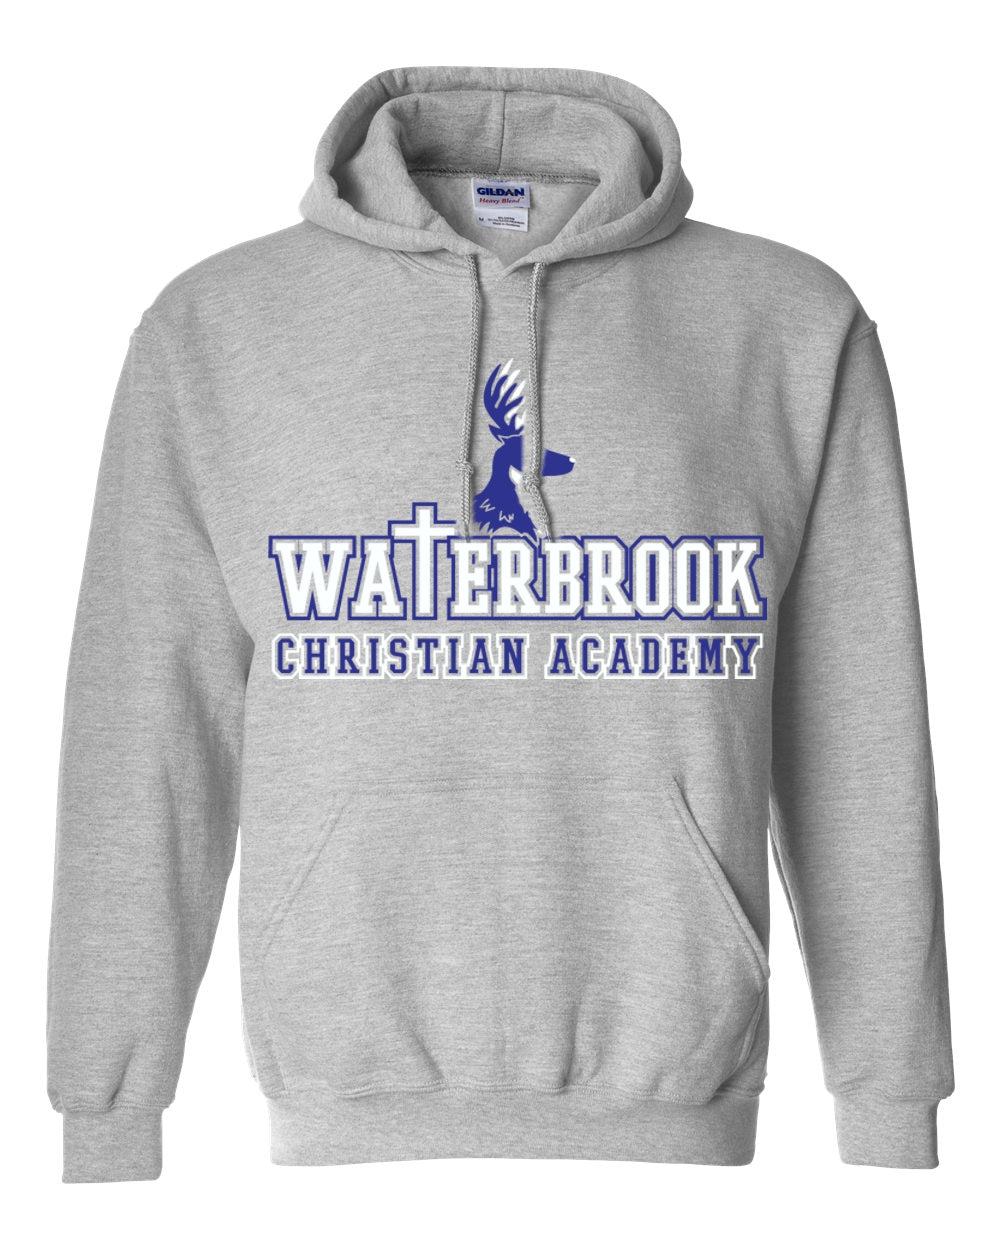 Waterbrook Christian Academy